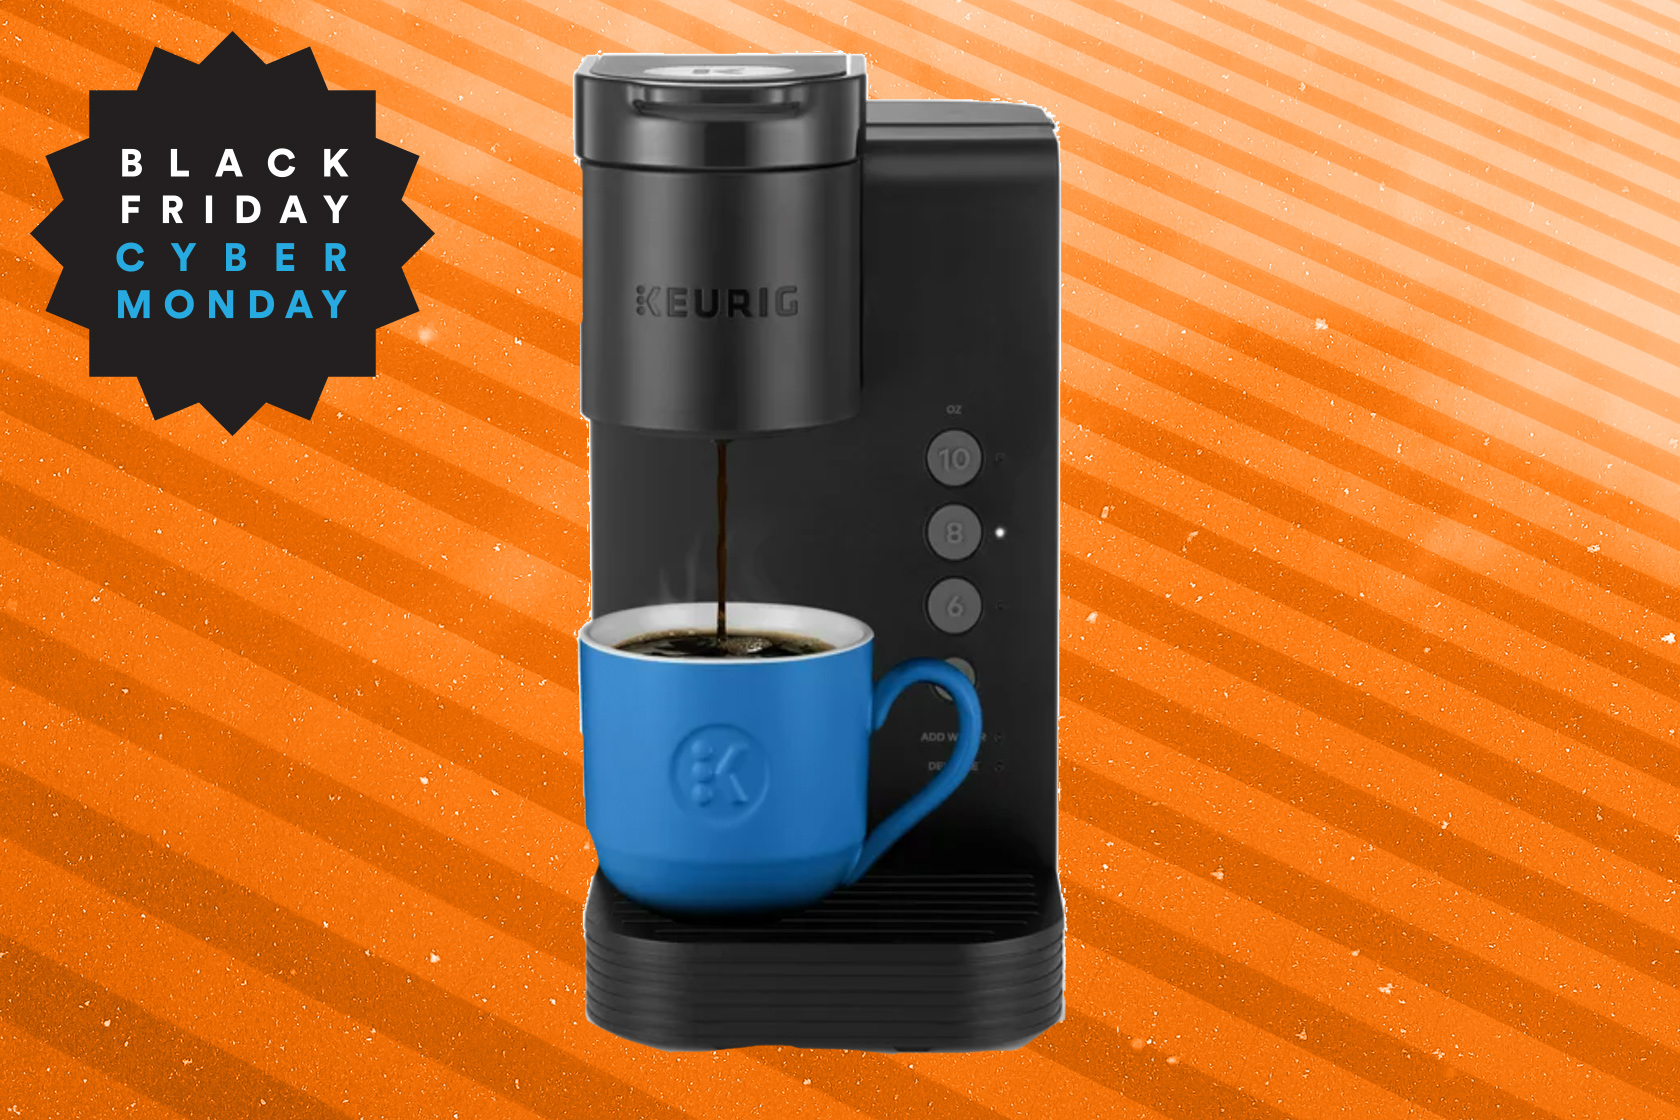 Walmart's Black Friday Keurig deal has a space-saving coffee maker